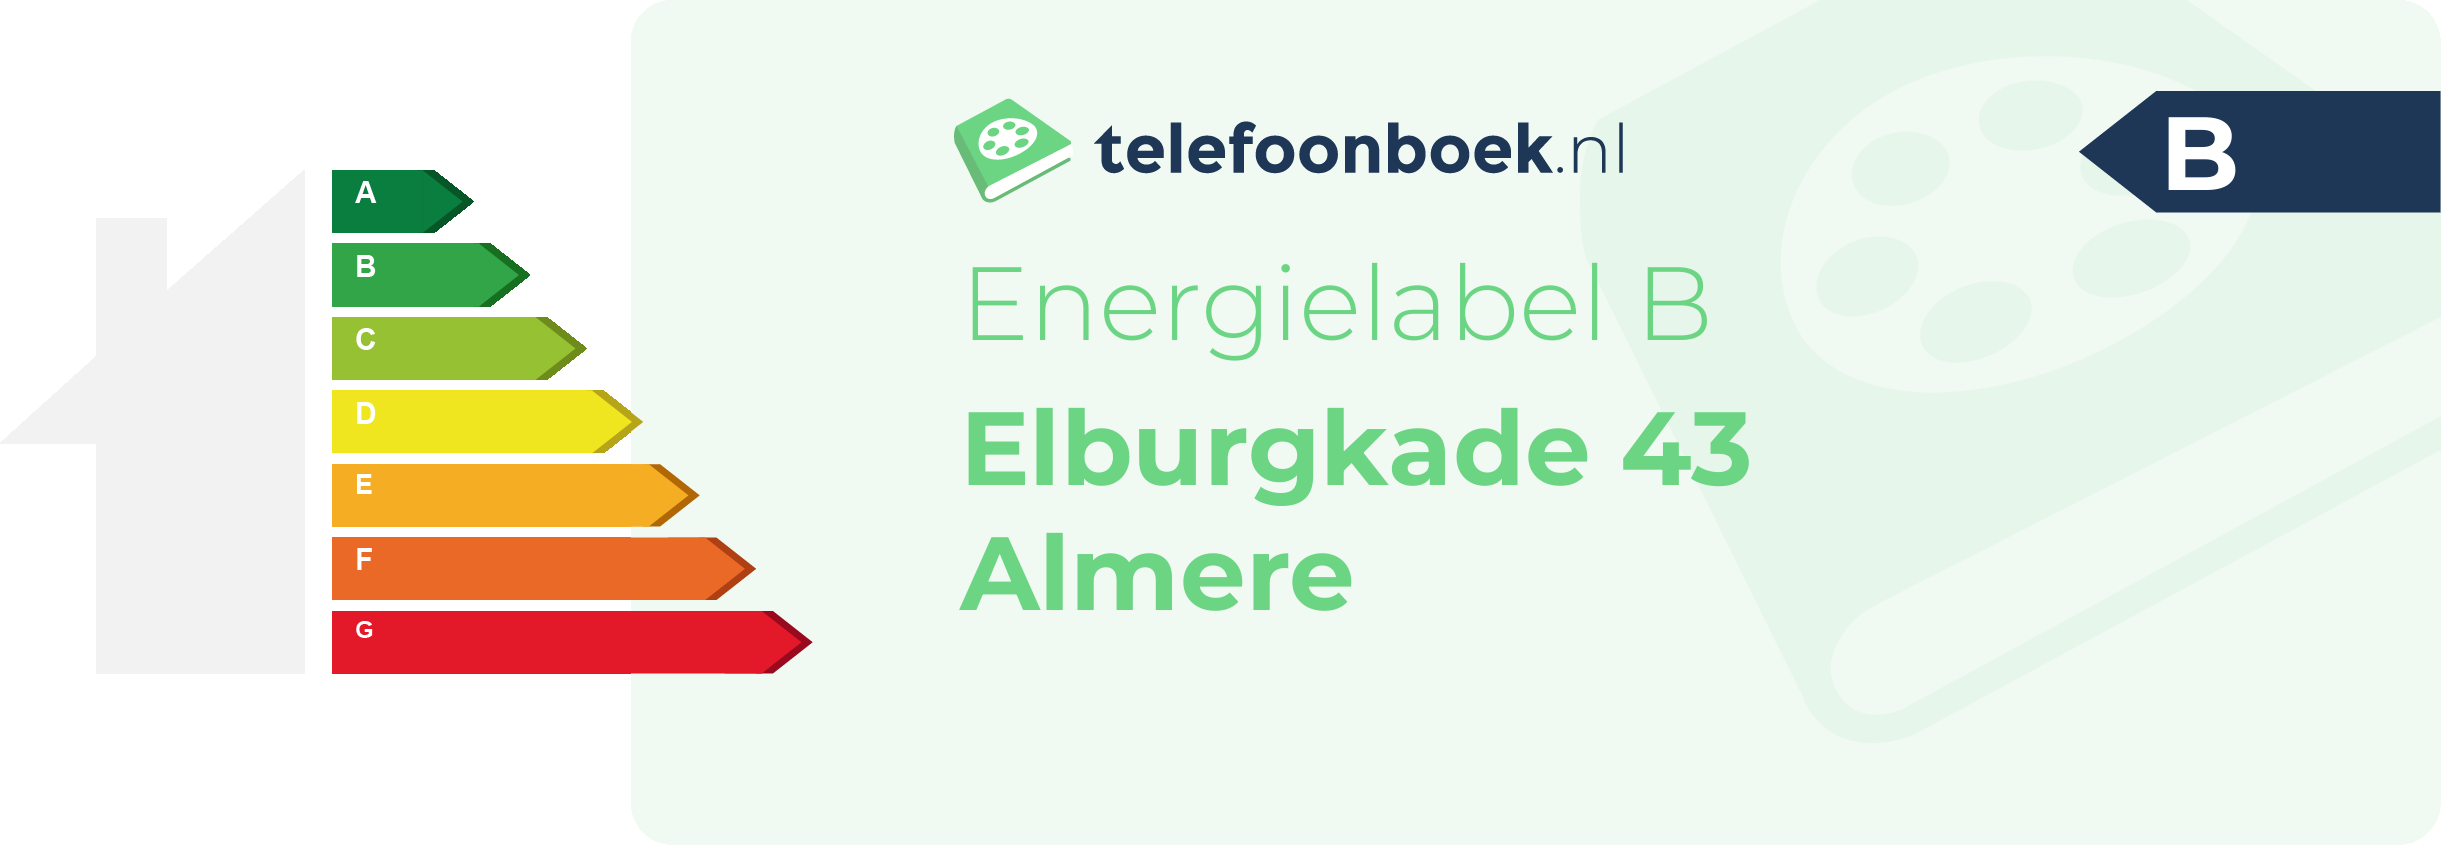 Energielabel Elburgkade 43 Almere